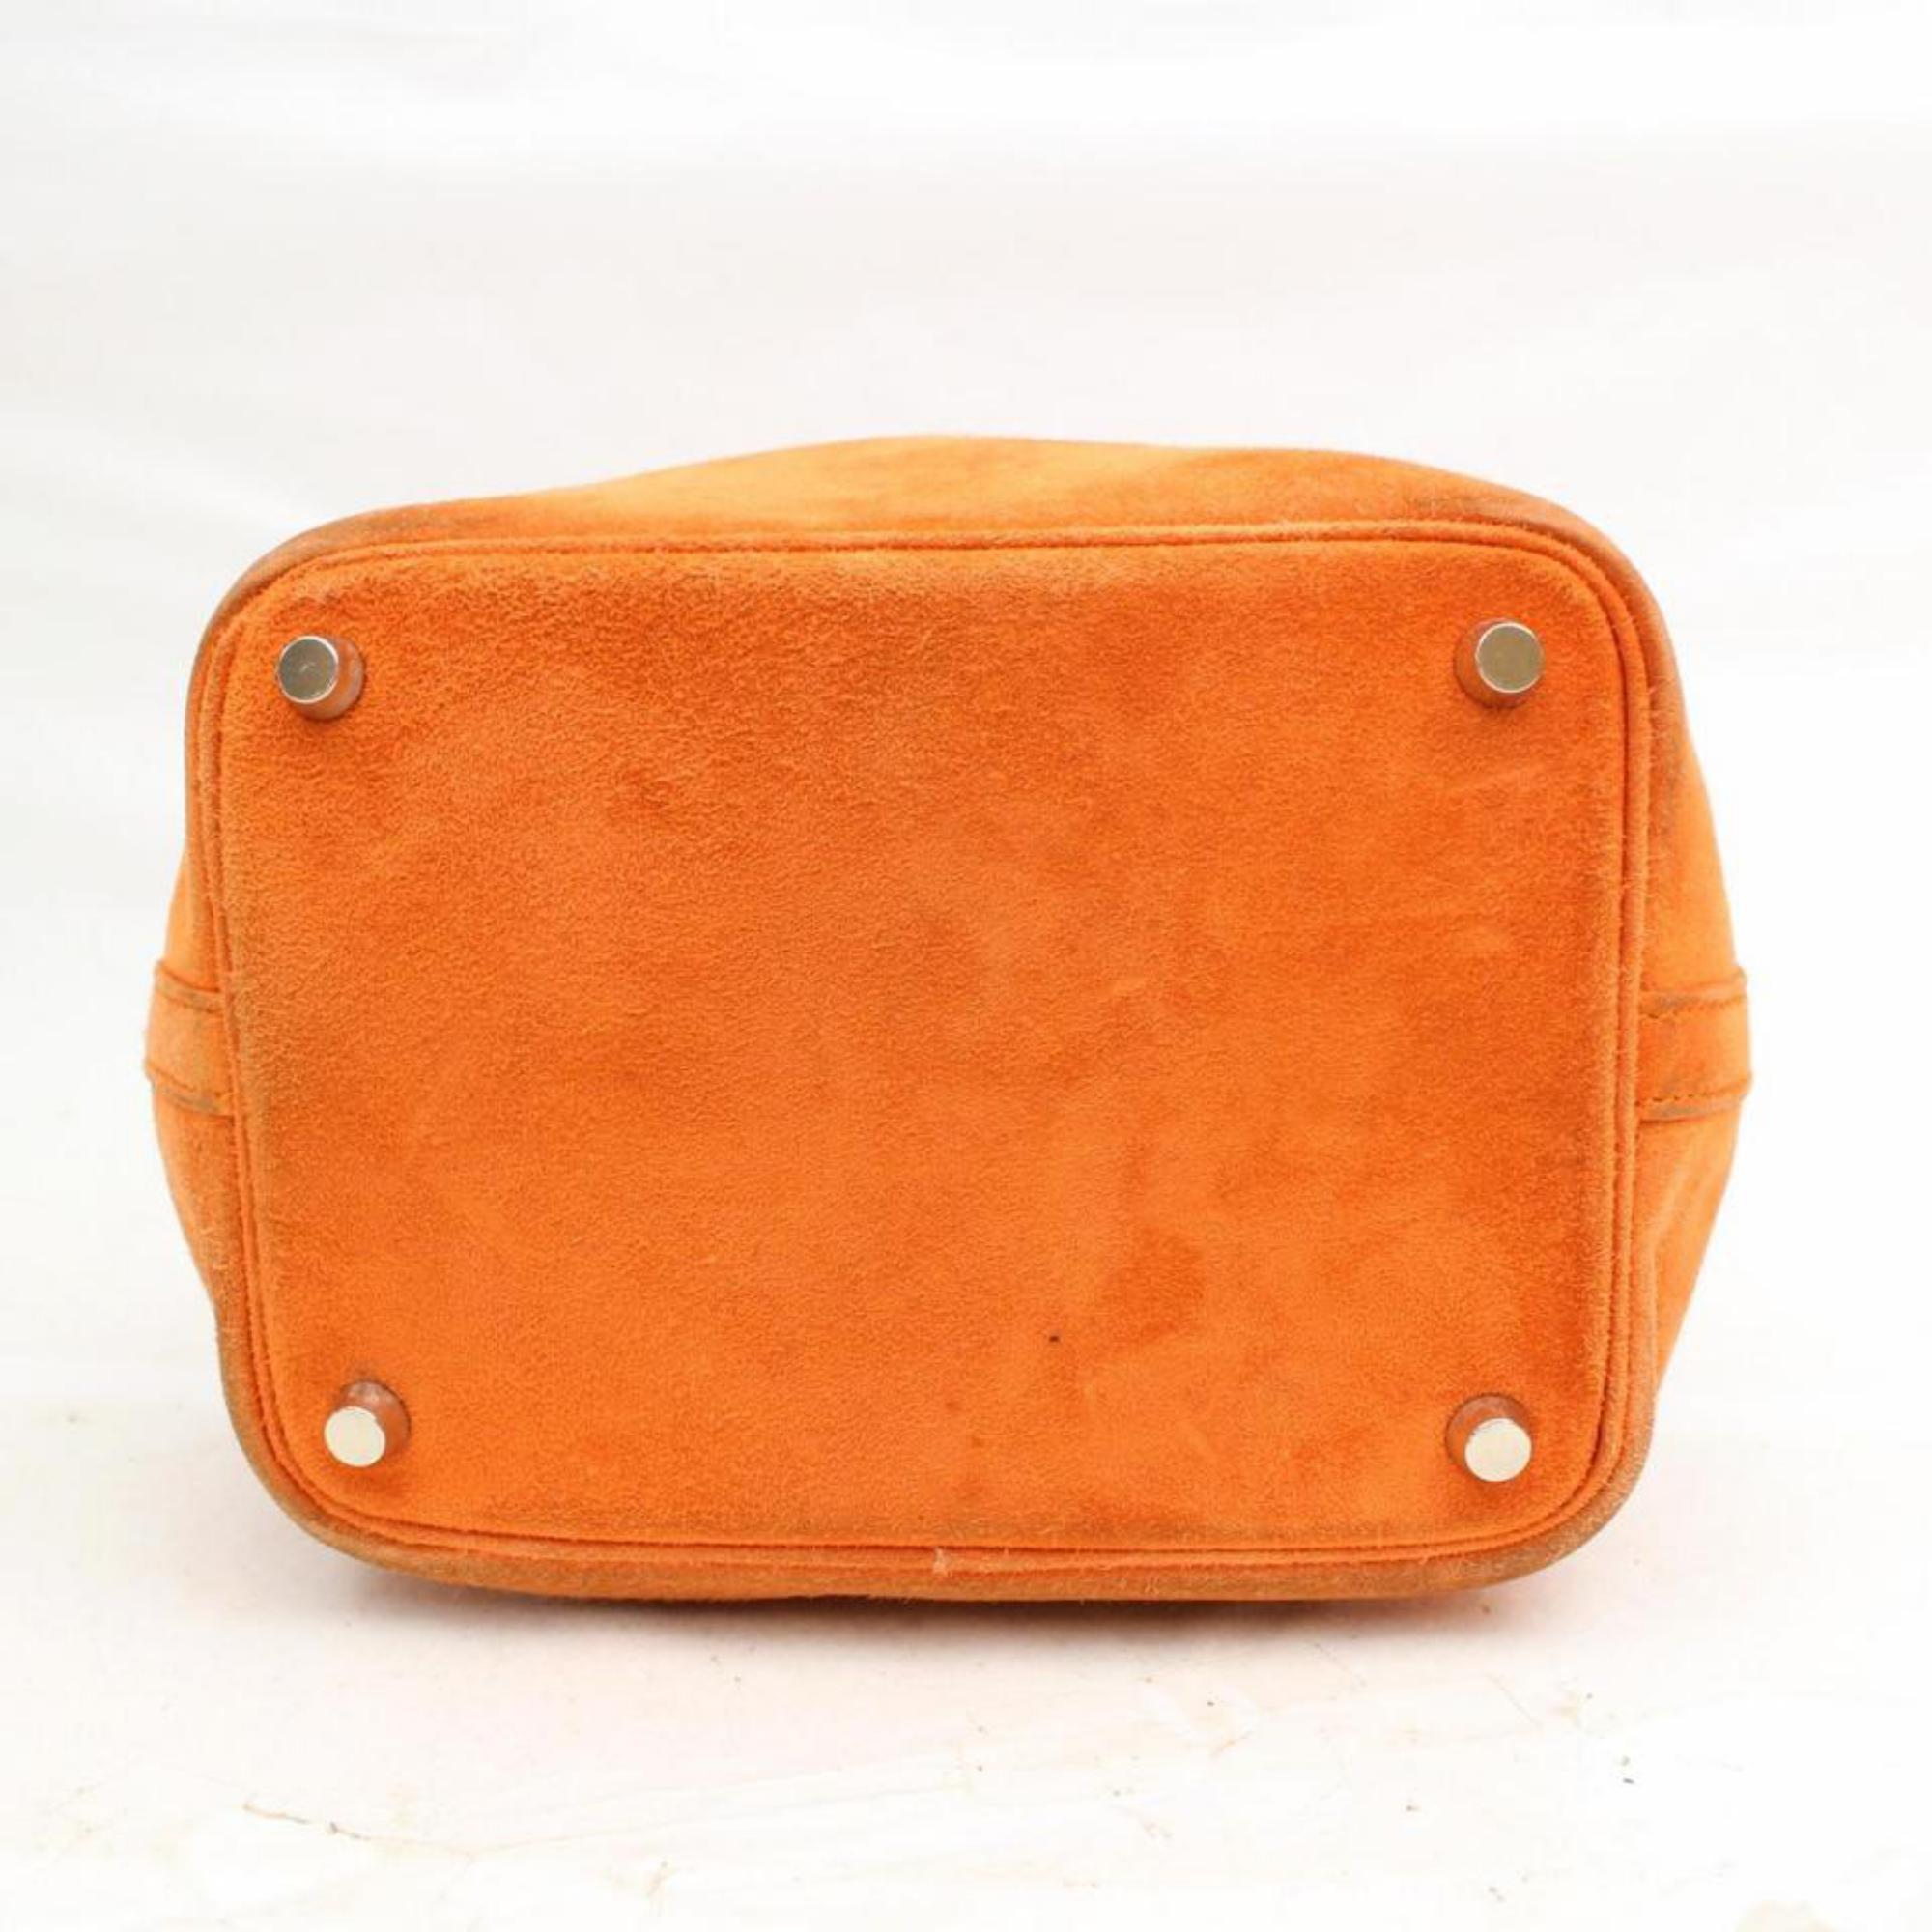 Hermès Picotin 18 Pm 868694 Orange Suede Leather Tote For Sale 2